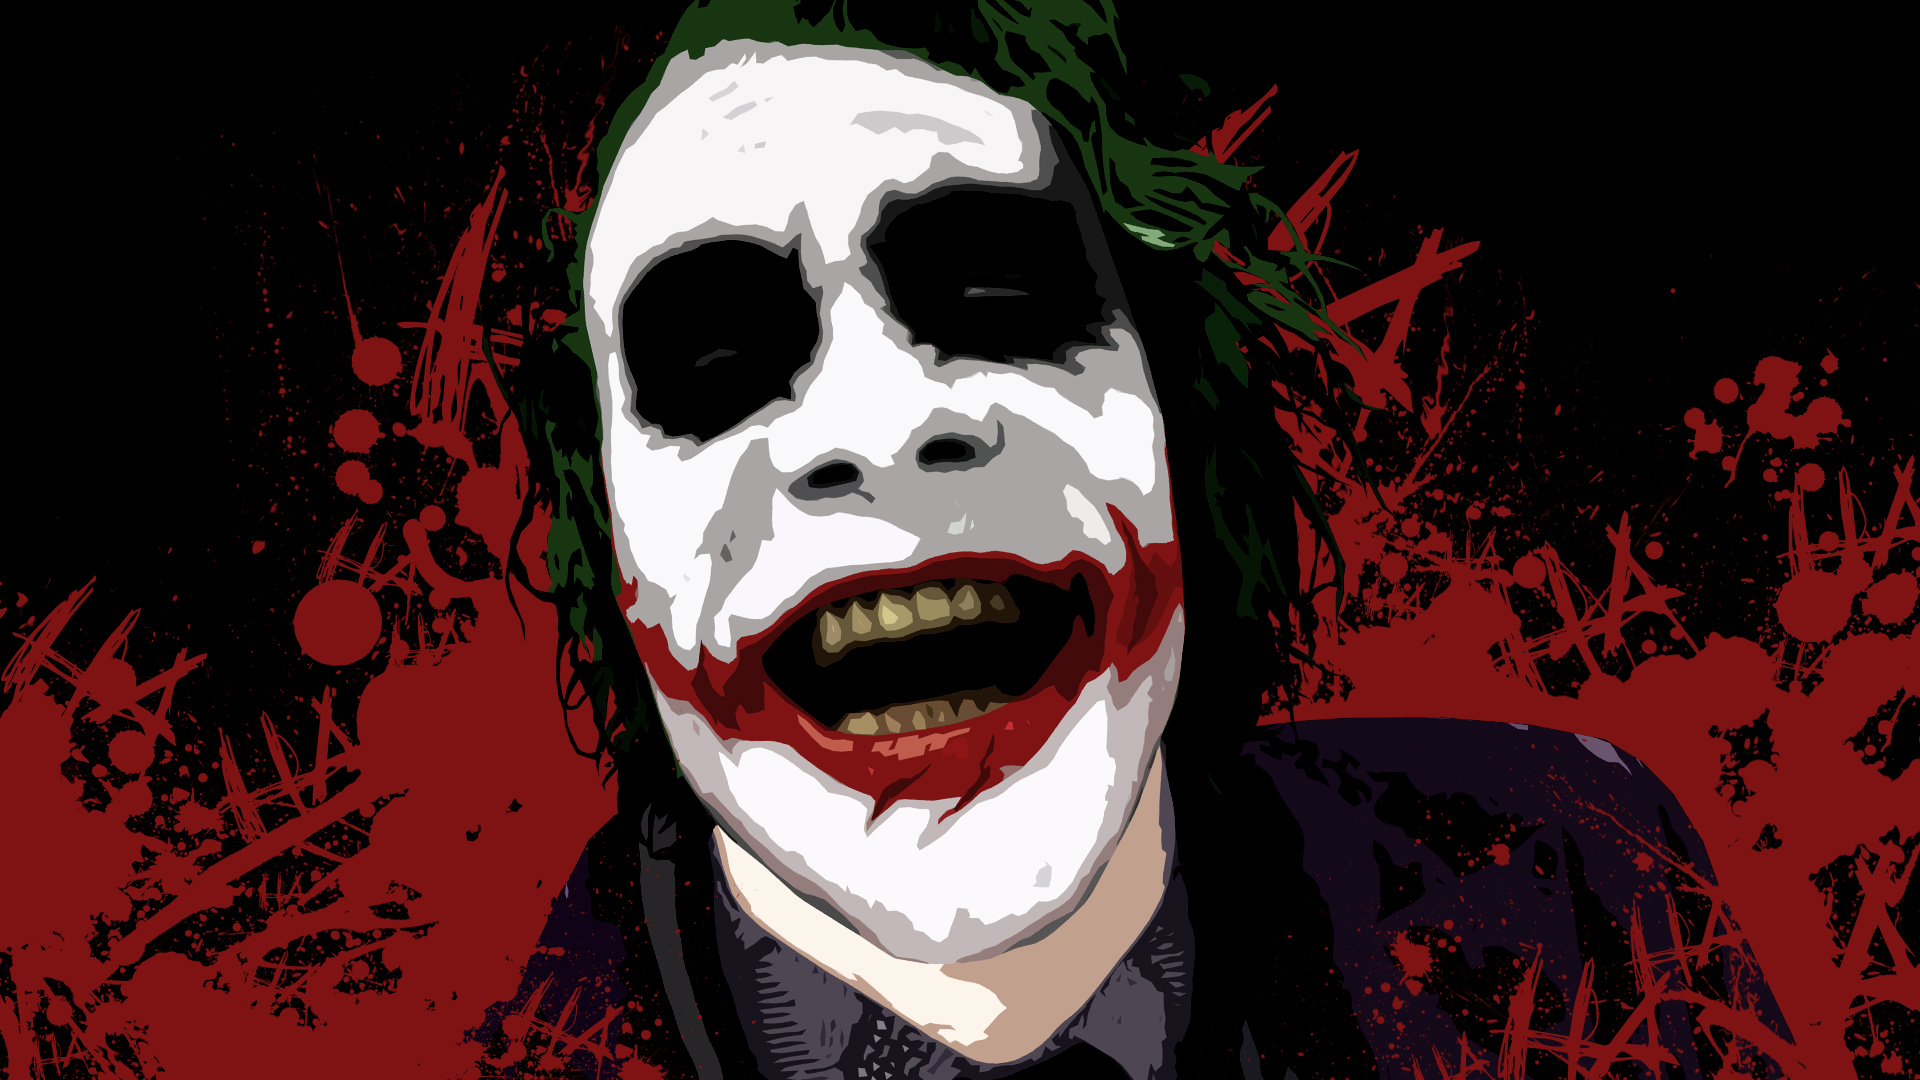 Joker Joaquin Phoenix With Red And Blue Background 4K HD Joker Wallpapers   HD Wallpapers  ID 44162